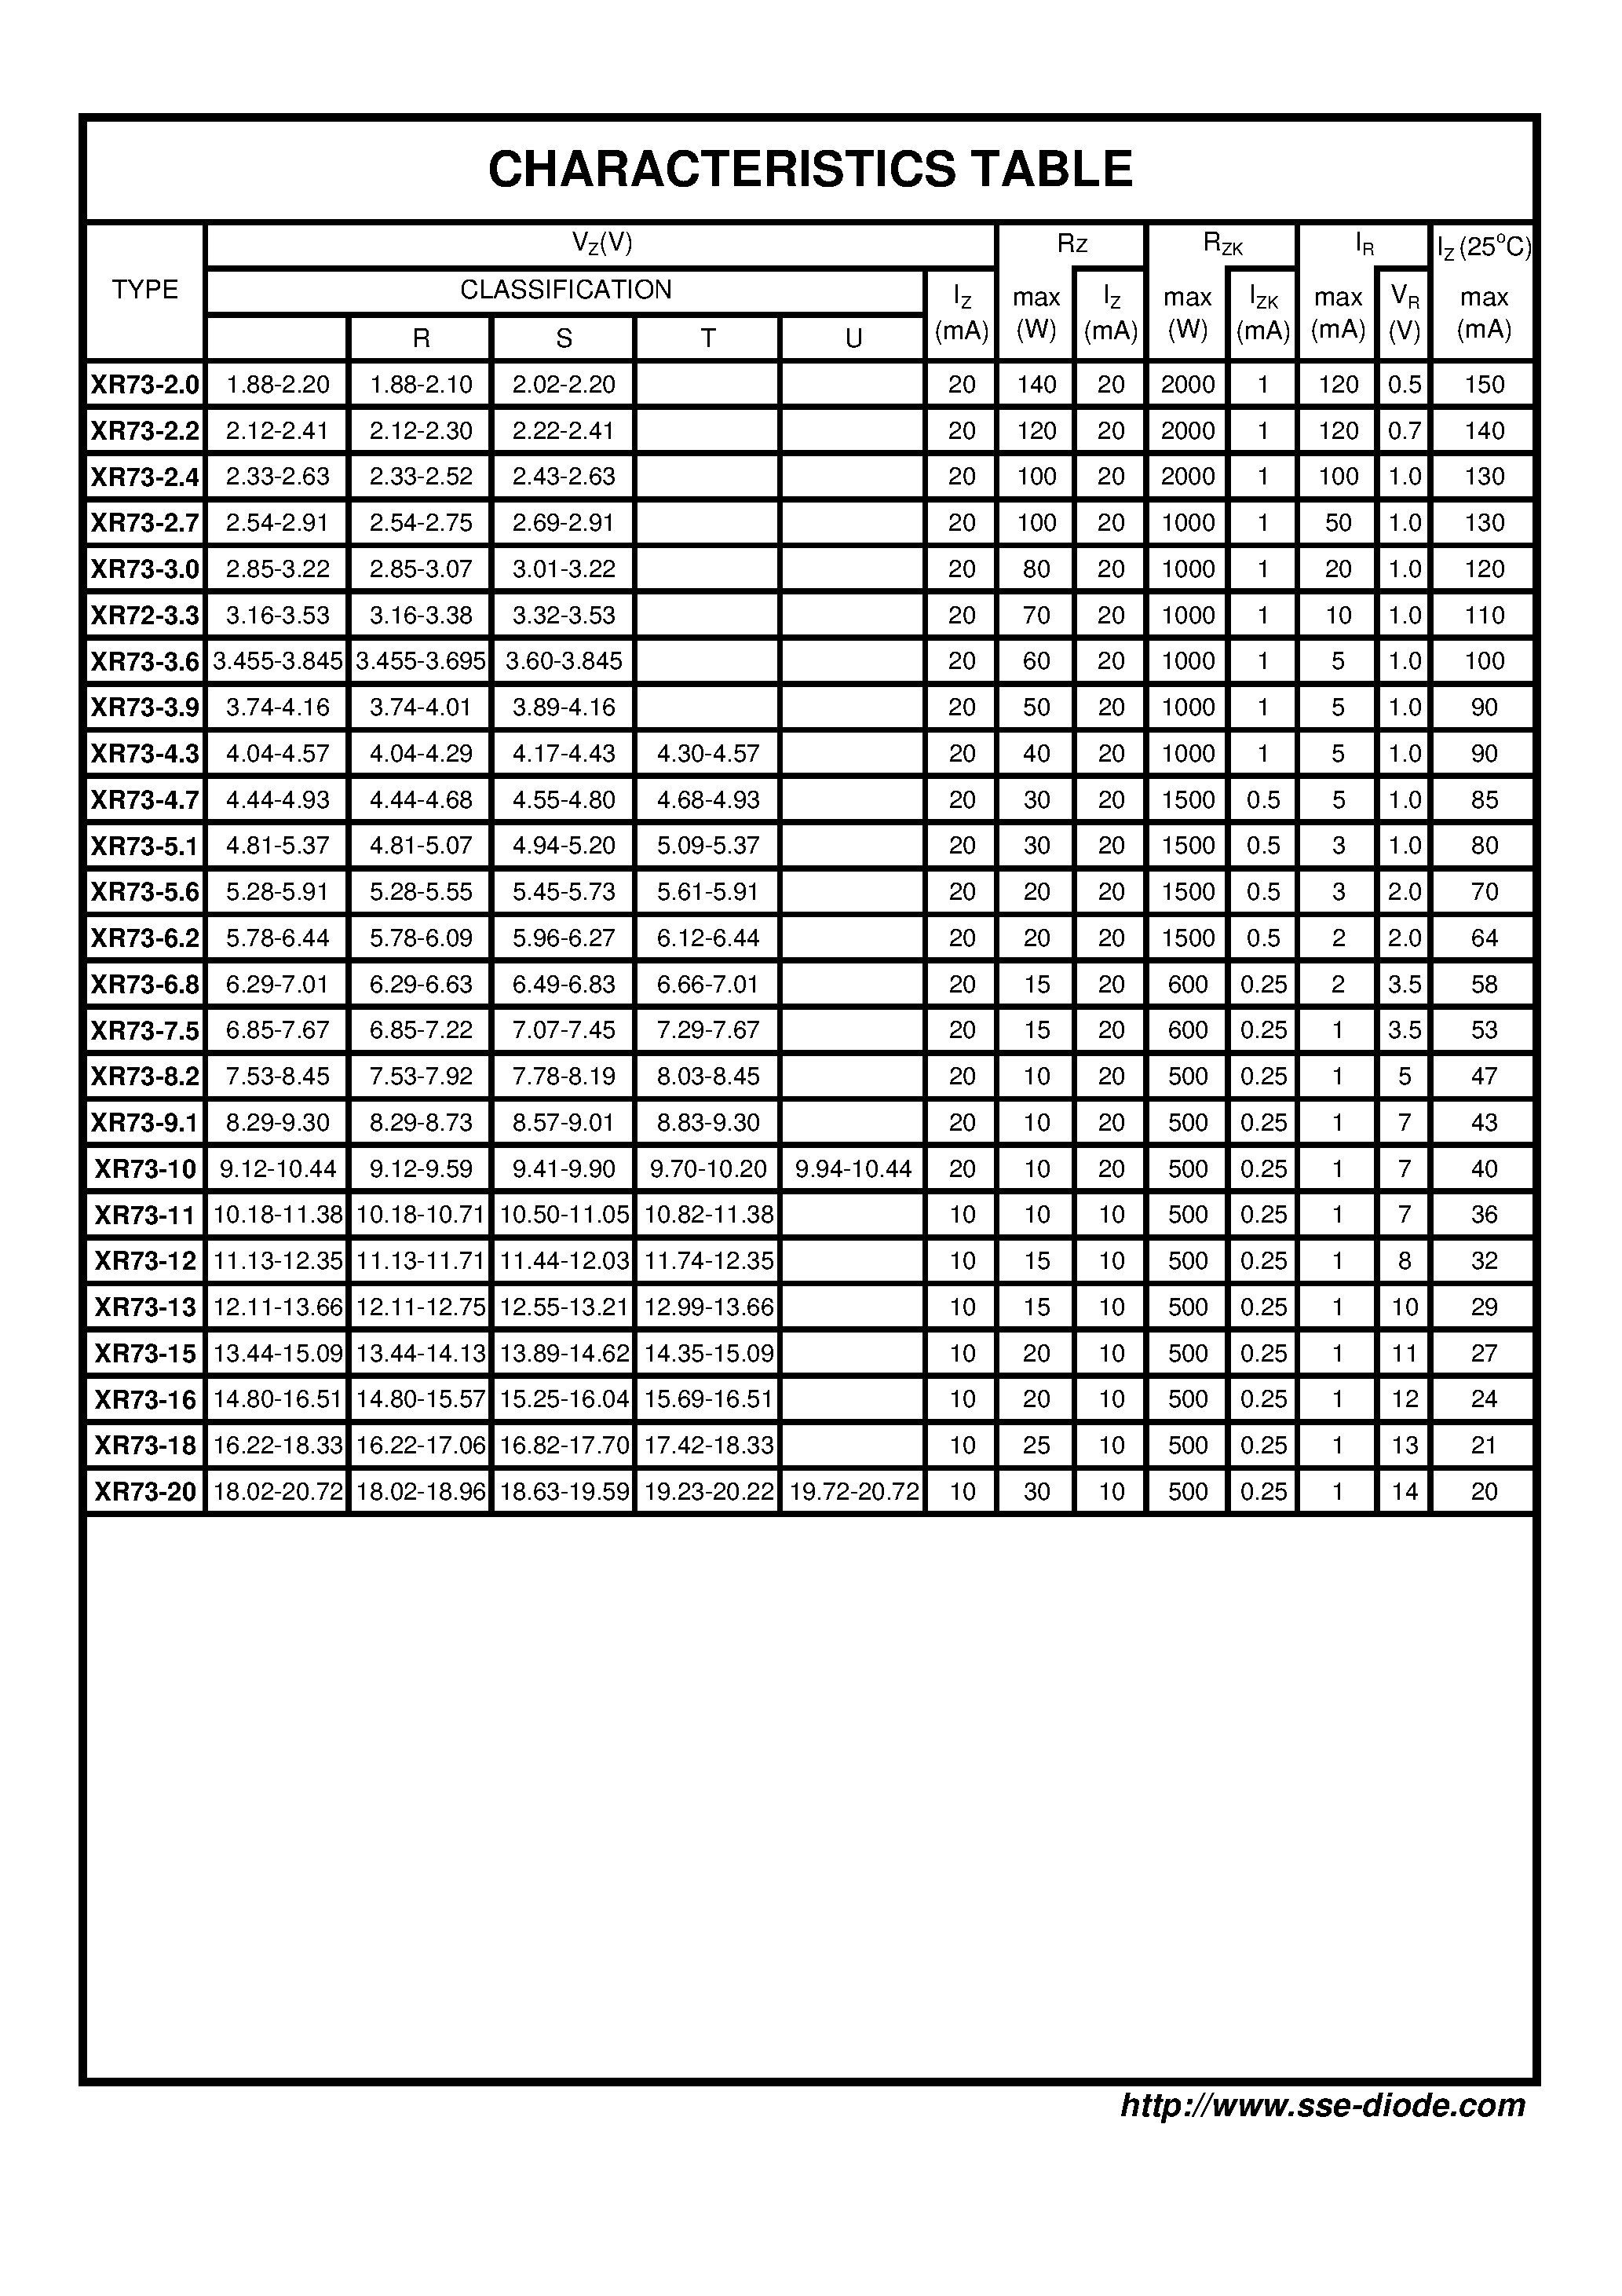 Datasheet XR73-9.1 - PLANAR ZENER DIODE page 2